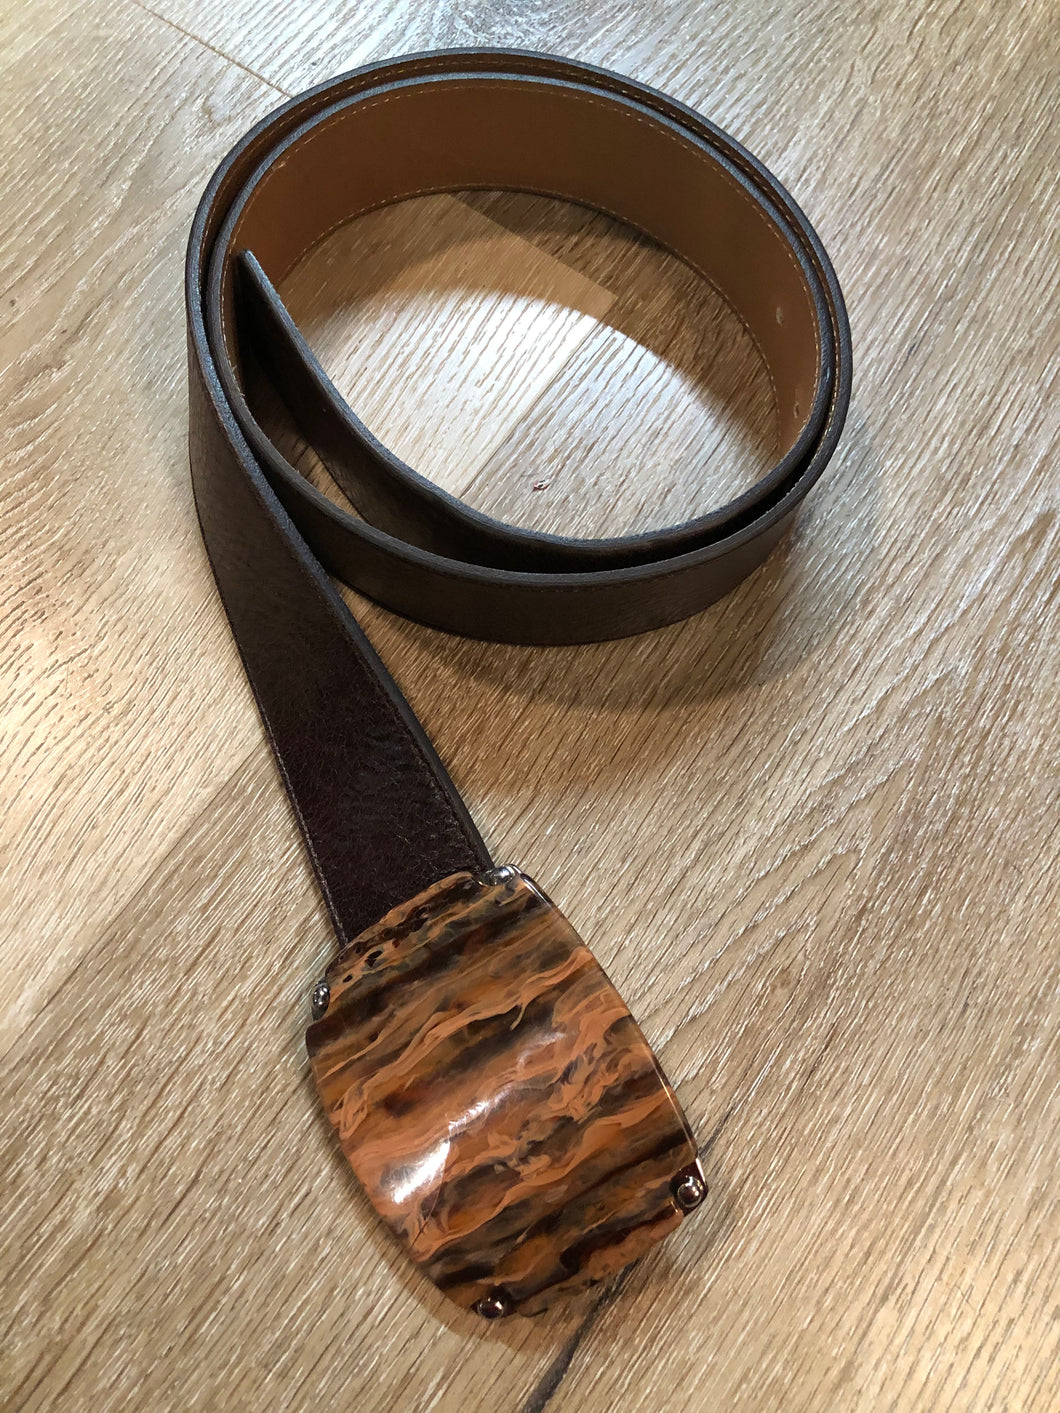 Kingspier Vintage - Dark brown textured leather belt with large marble look resin buckle.